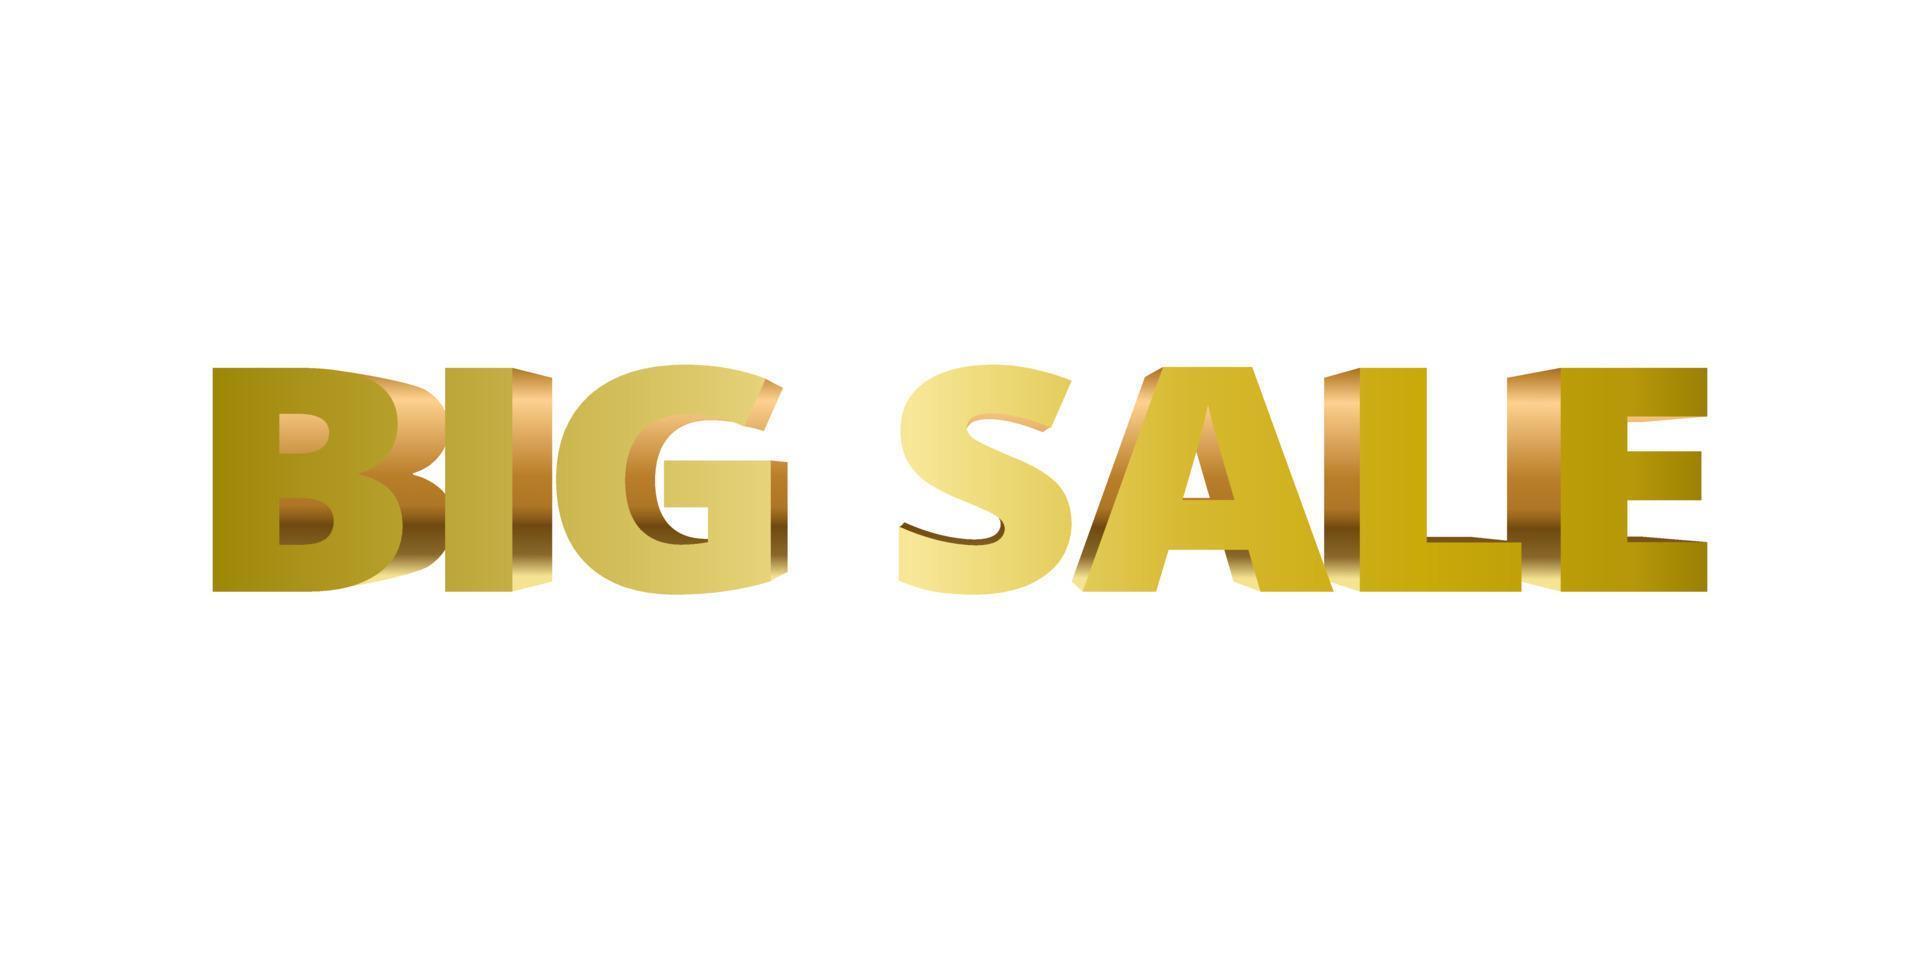 Golden Big sale 2.5D text vector. Use for discount sale promotion banner, website, poster, etc vector